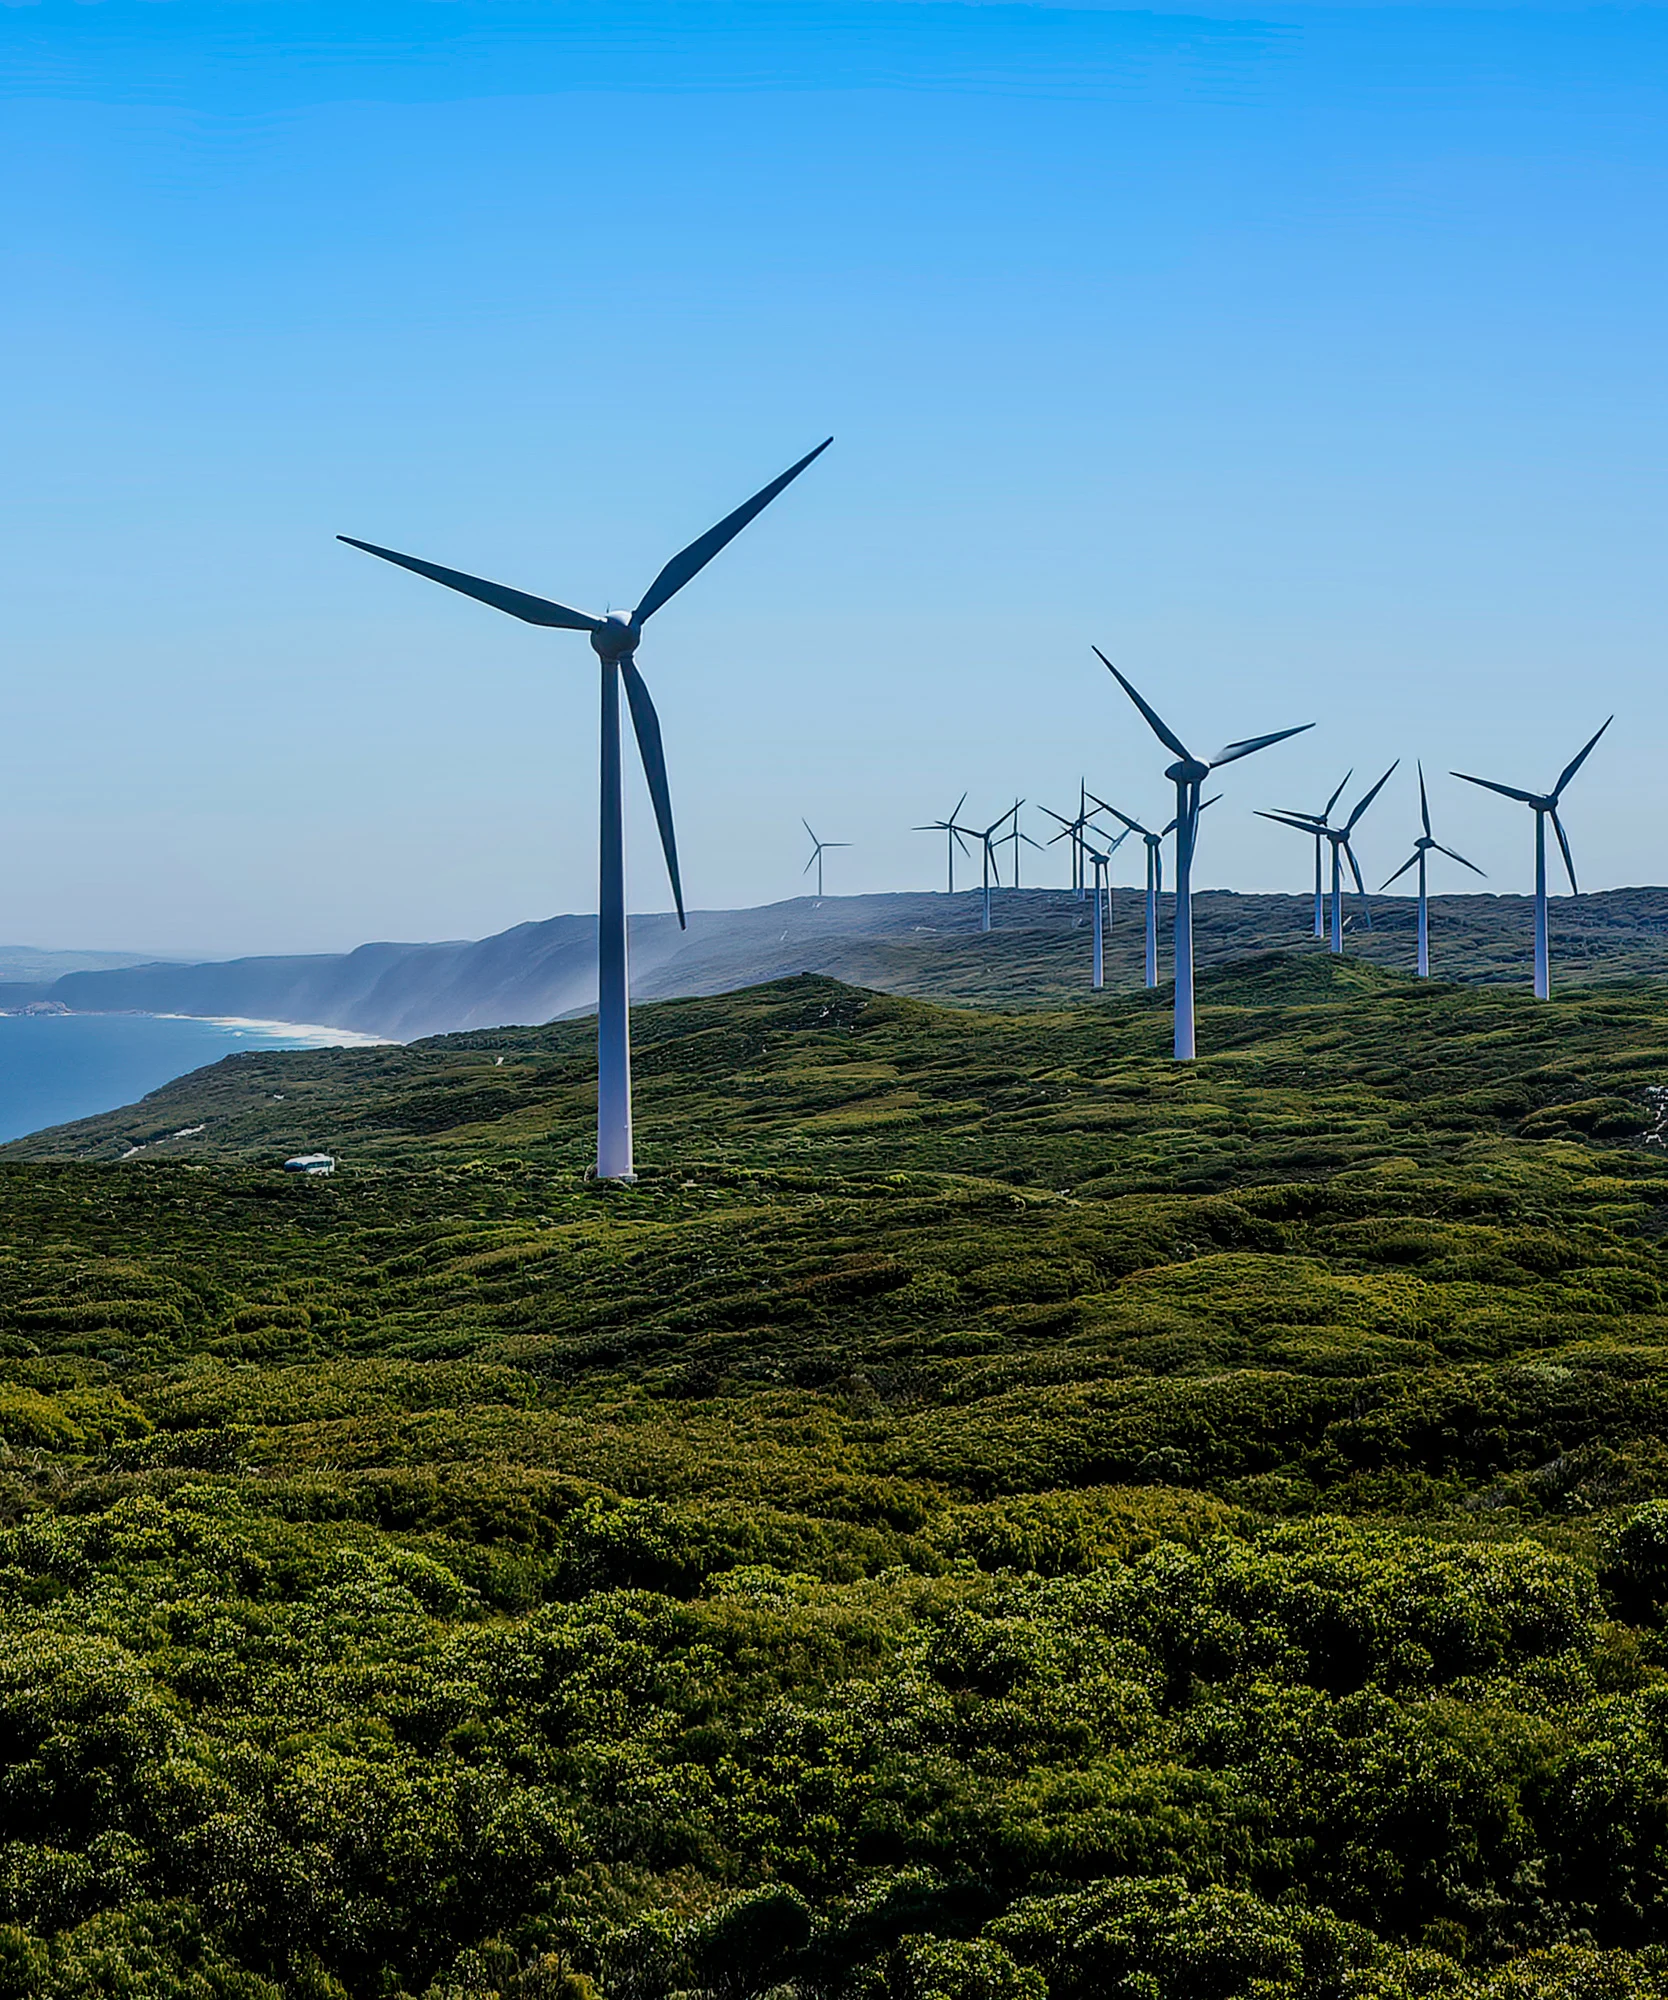 A coastal wind farm